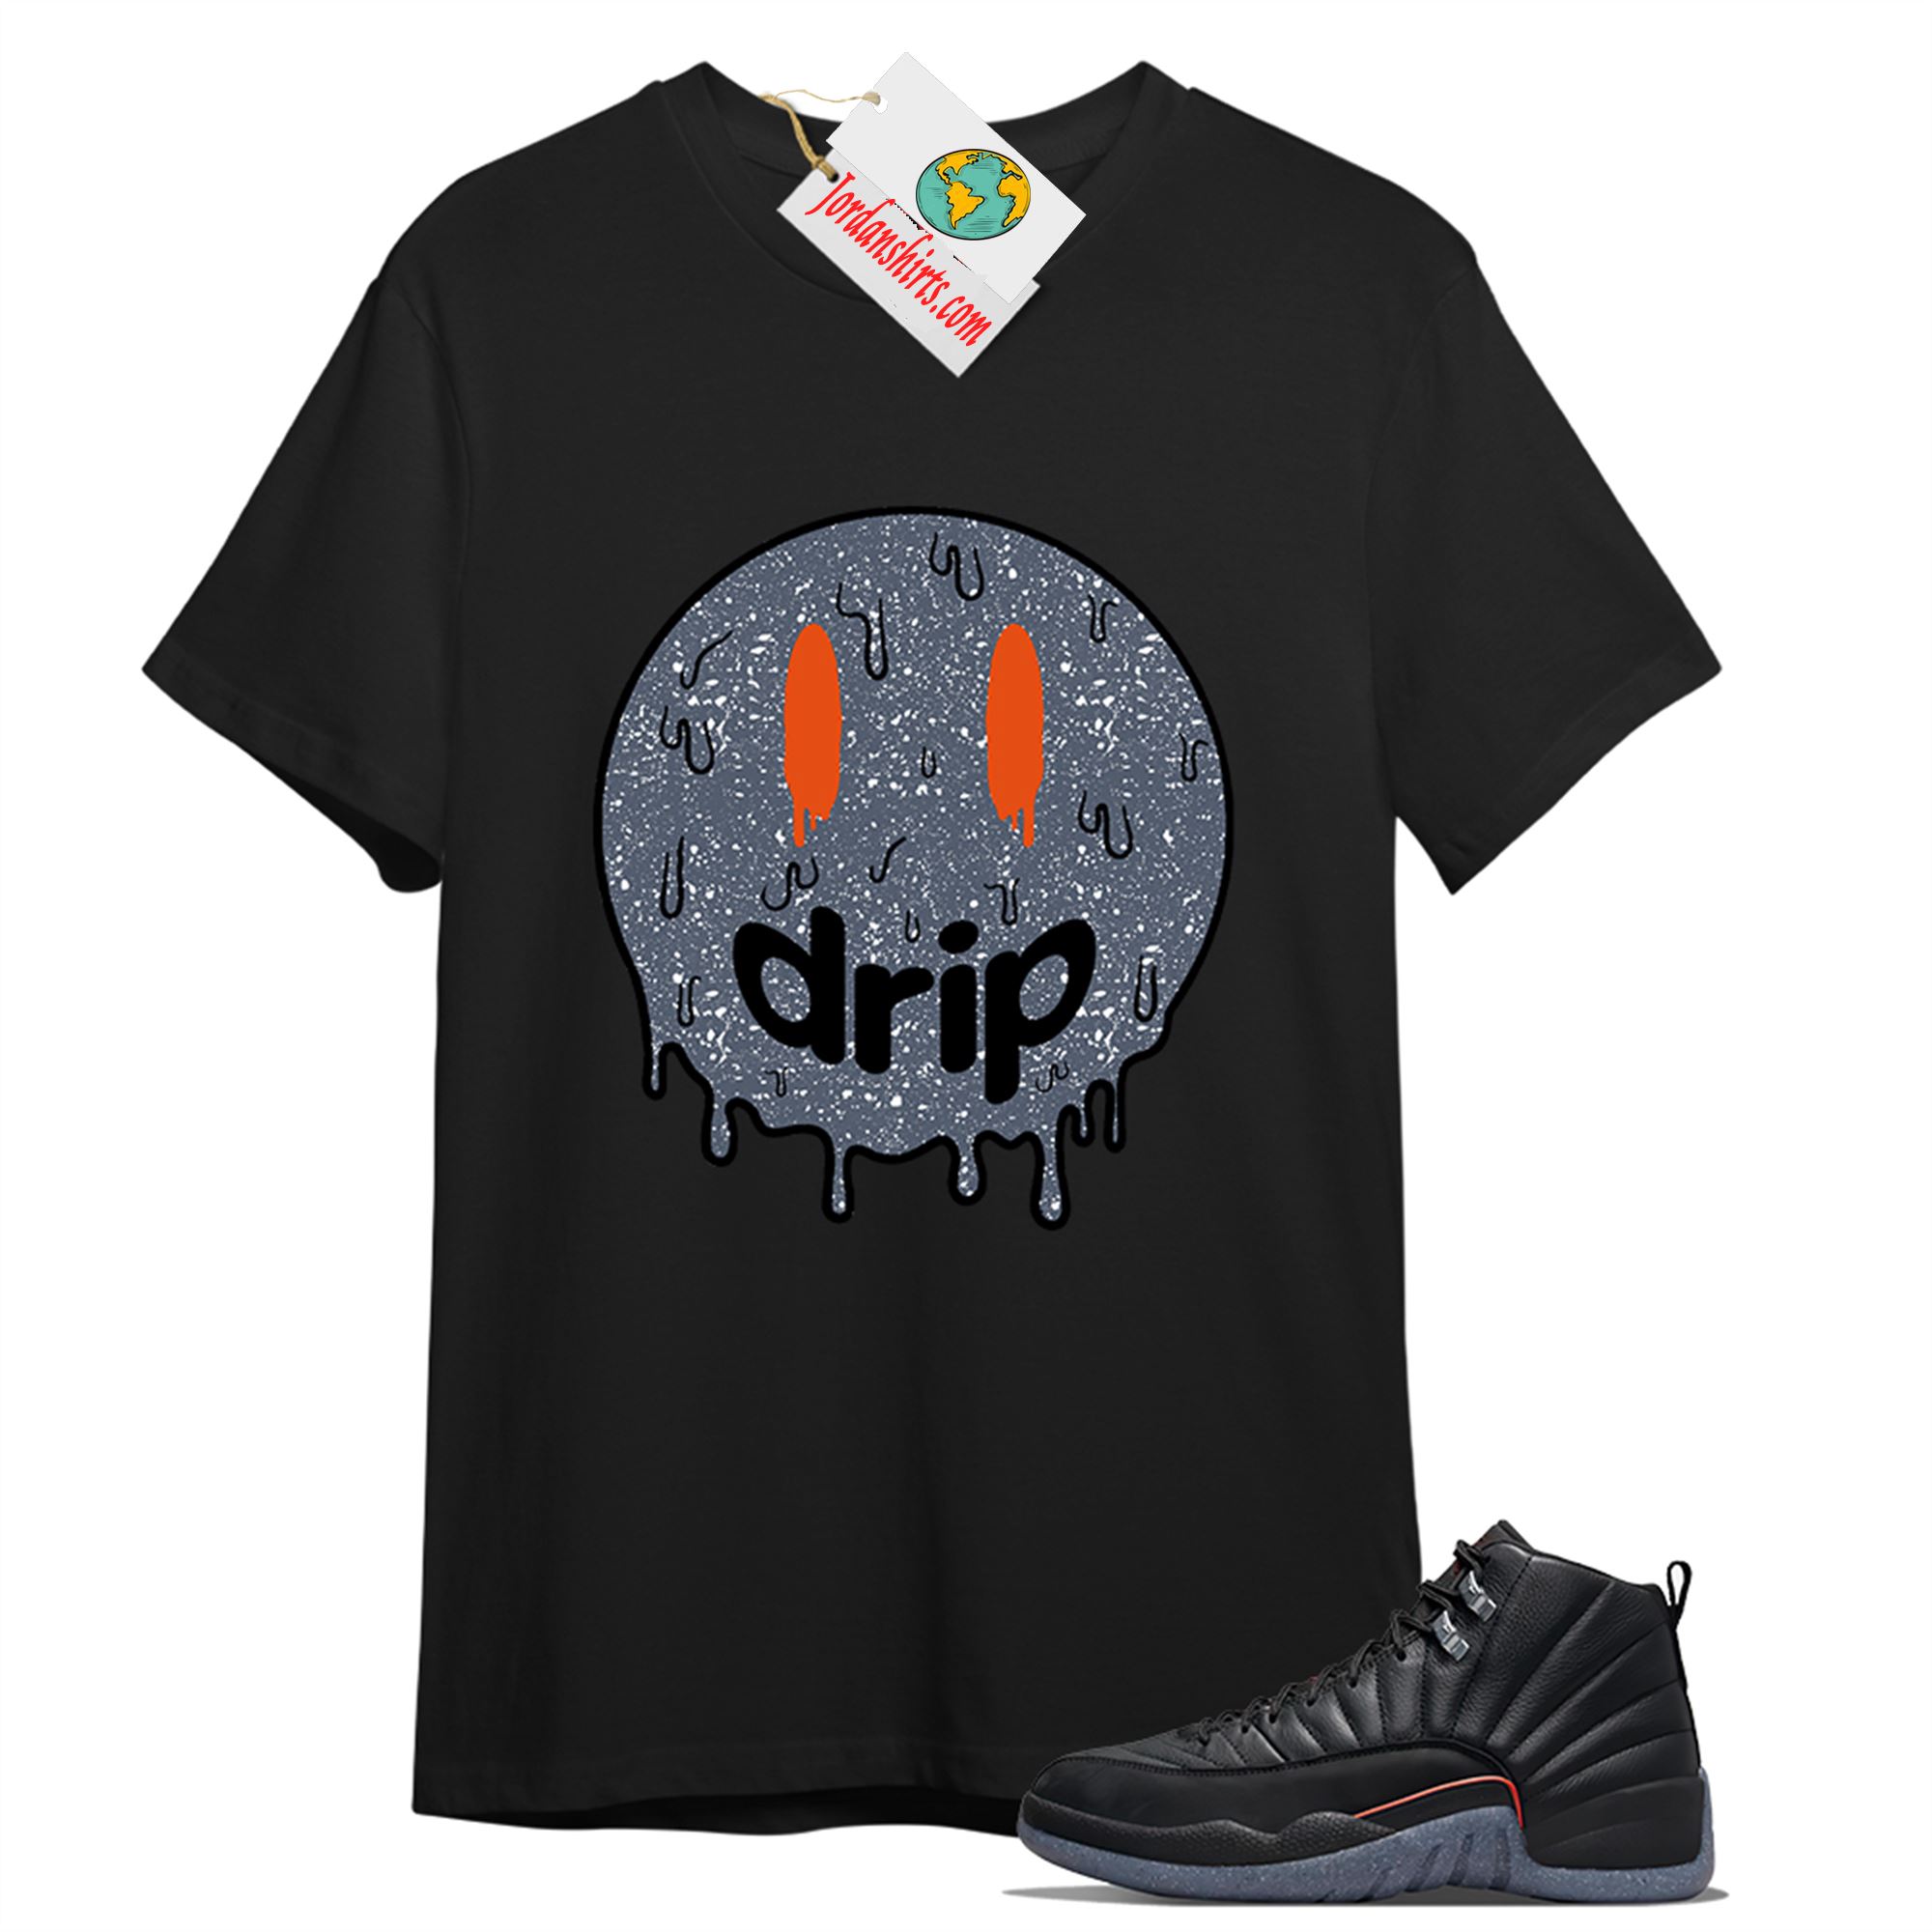 Jordan 12 Shirt, Drip Black T-shirt Air Jordan 12 Utility Grind 12s Plus Size Up To 5xl